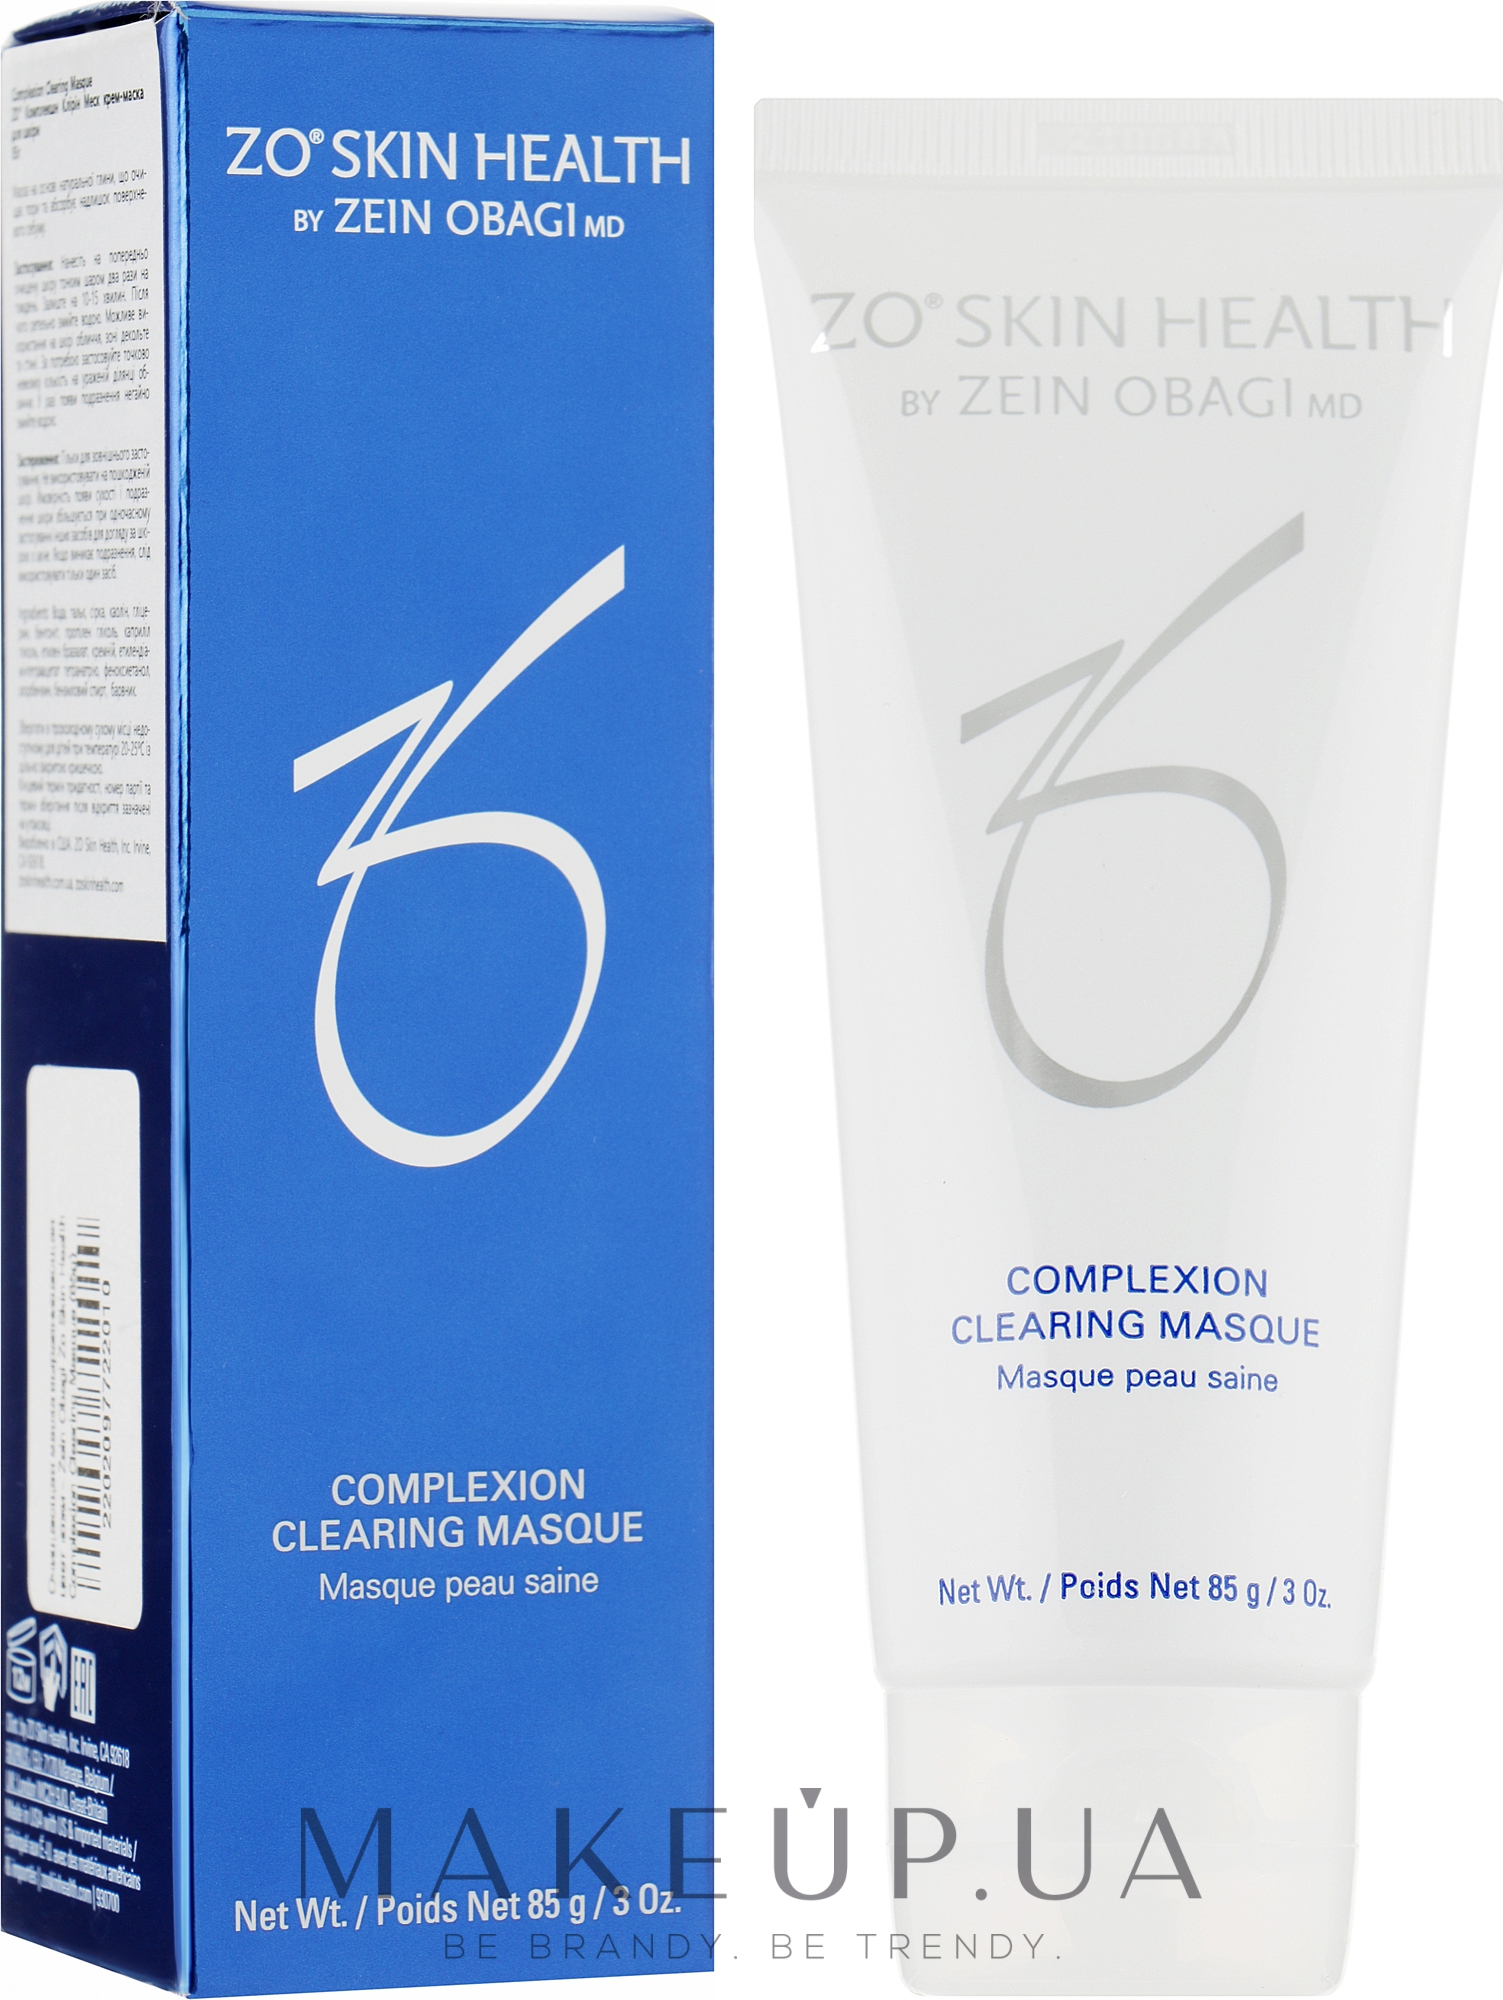 Очищающая маска выравнивающая цвет кожи - Zein Obagi Zo Skin Health Complexion Clearing Masque — фото 85g